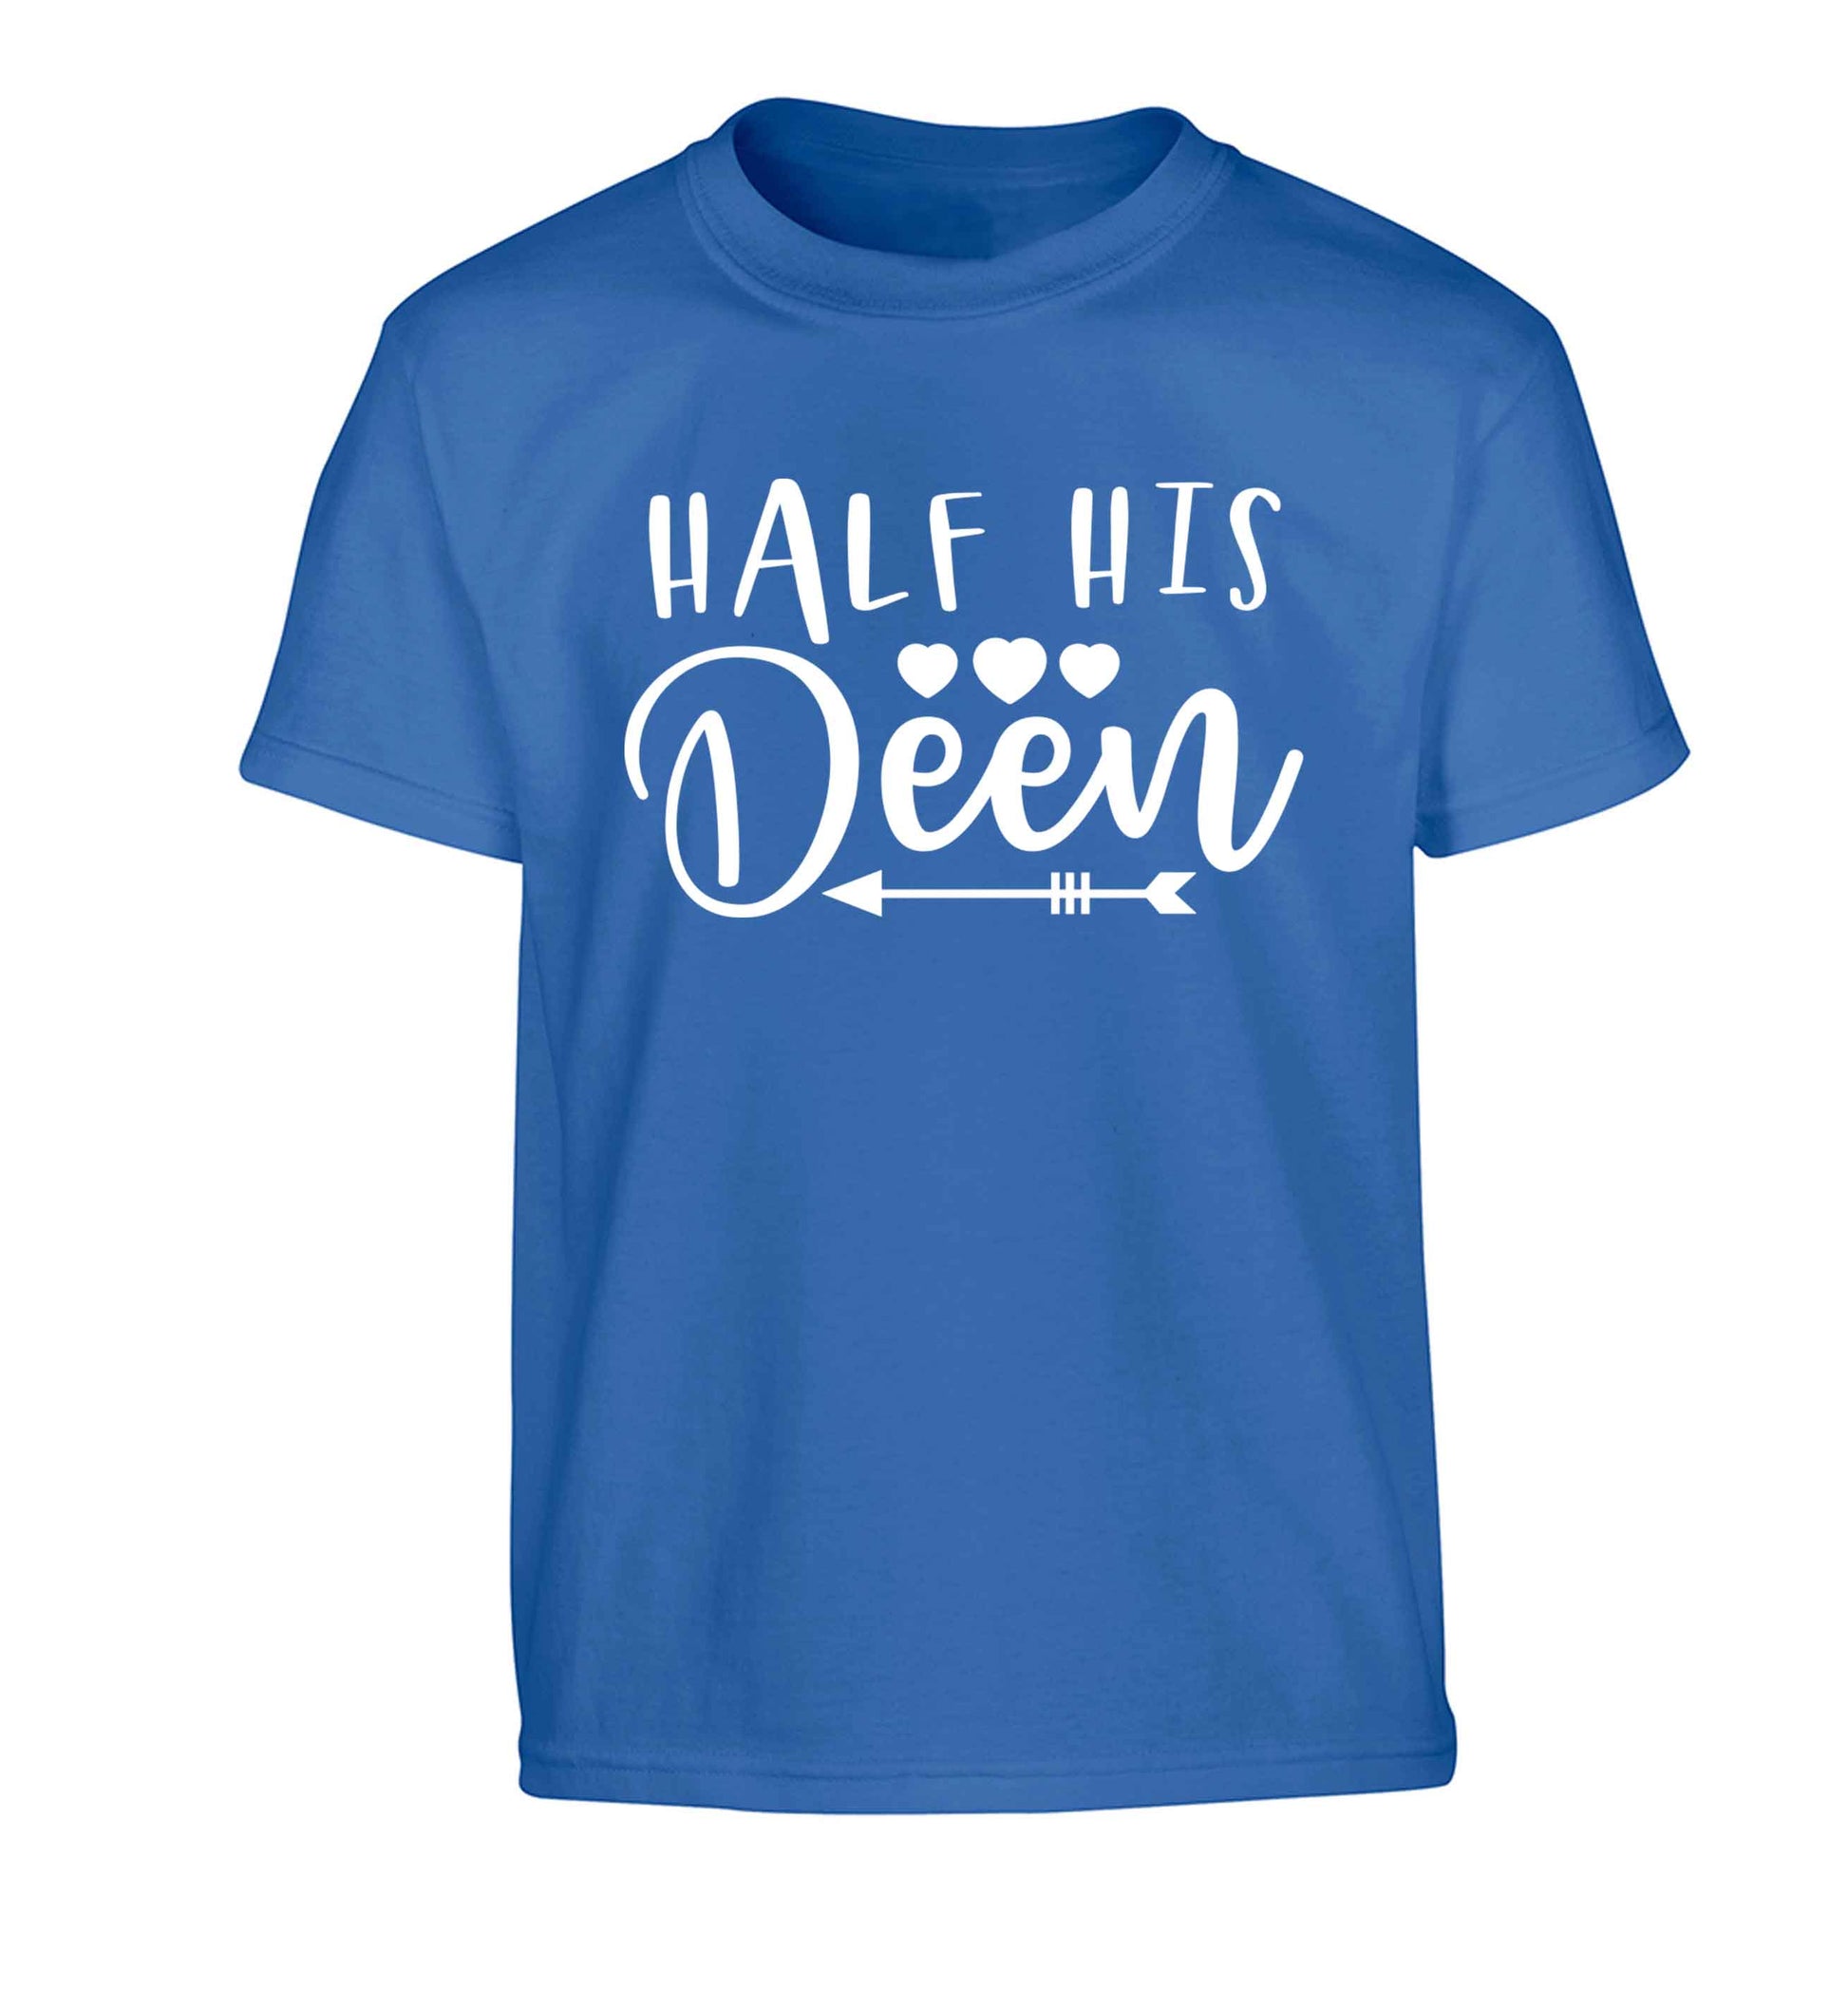 Half his deen Children's blue Tshirt 12-13 Years